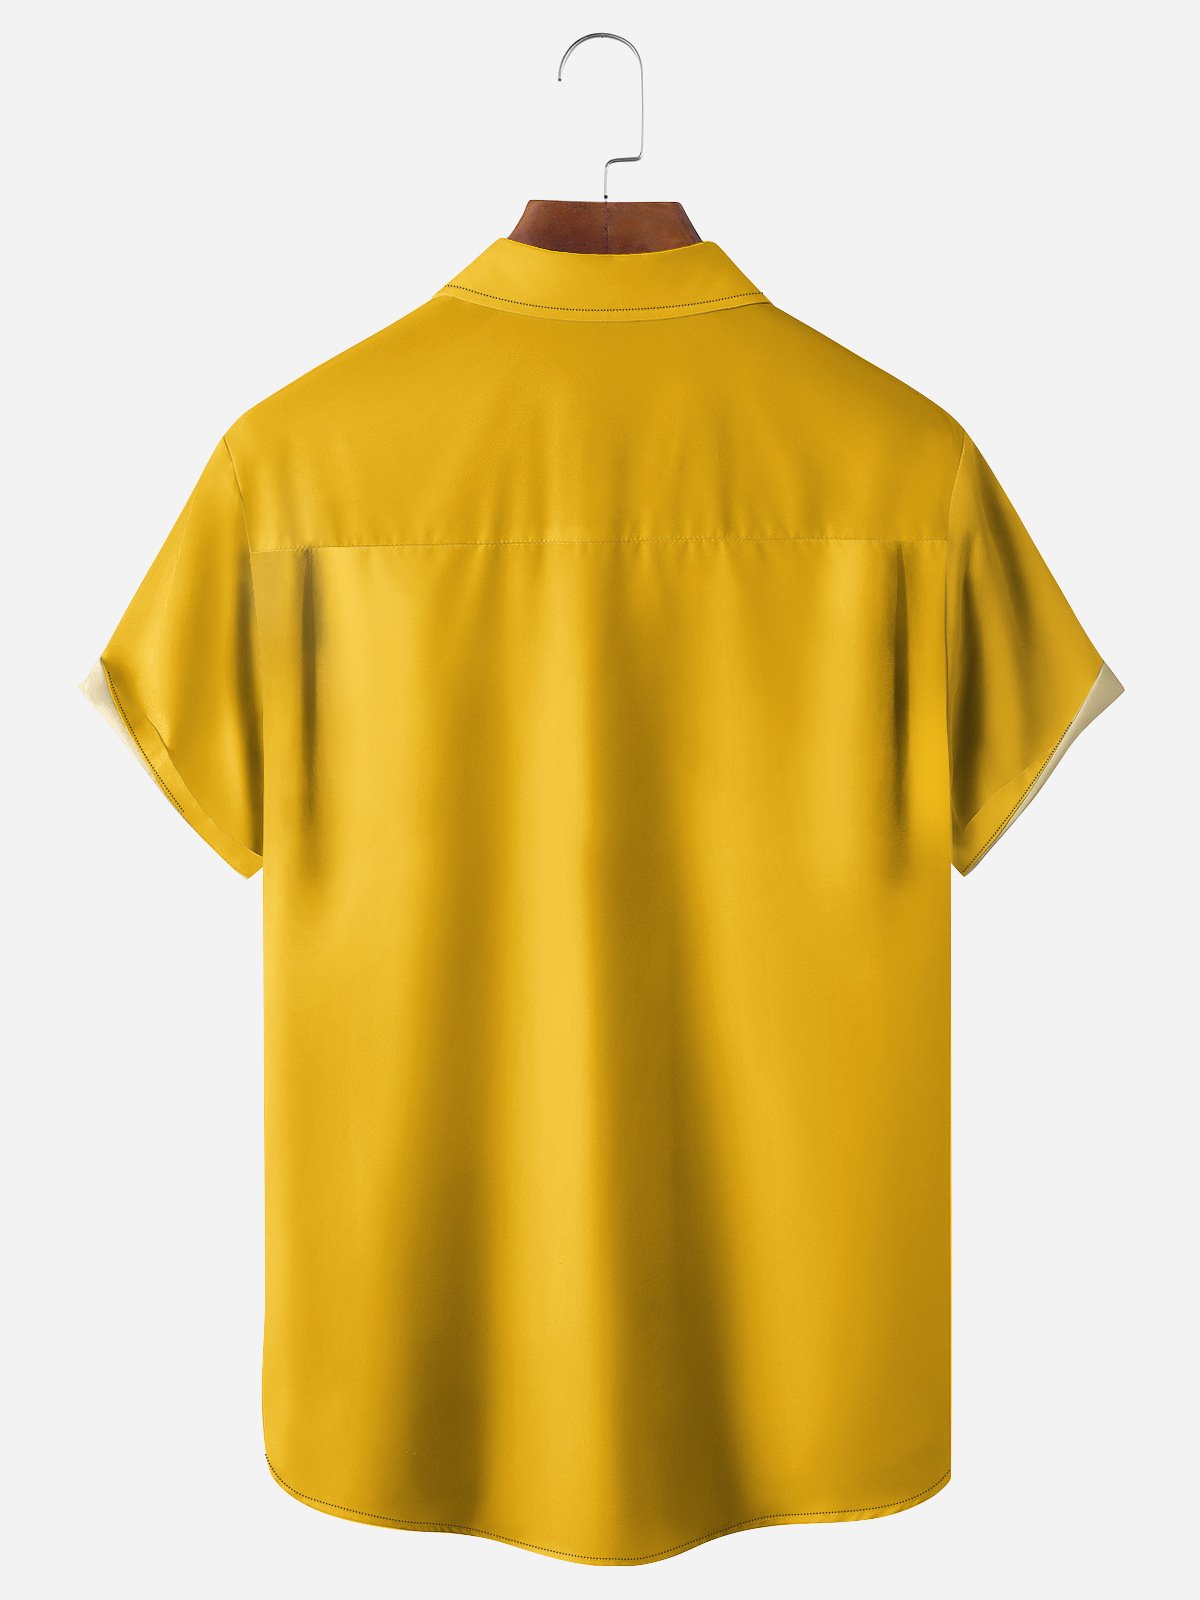 Apes Chest Pocket Short Sleeve Bowling Shirt